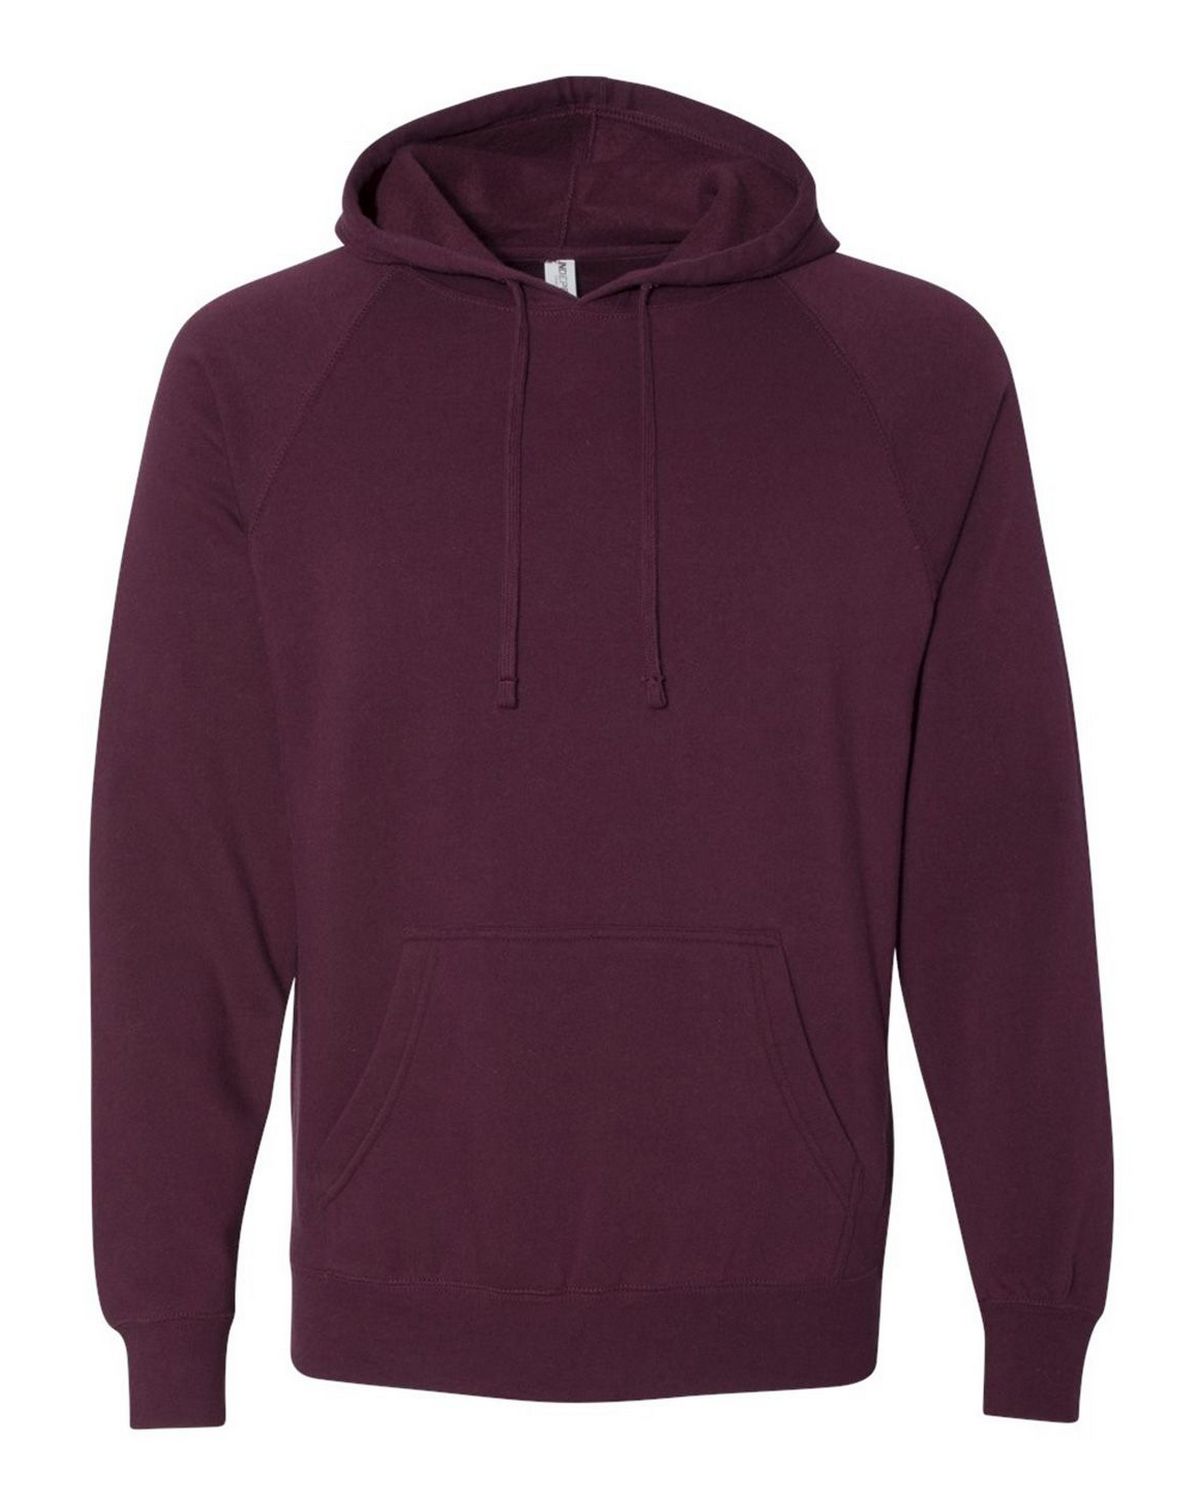 Independent Trading Co. PRM33SBP Unisex Raglan Hooded Pullover Sweatshirt